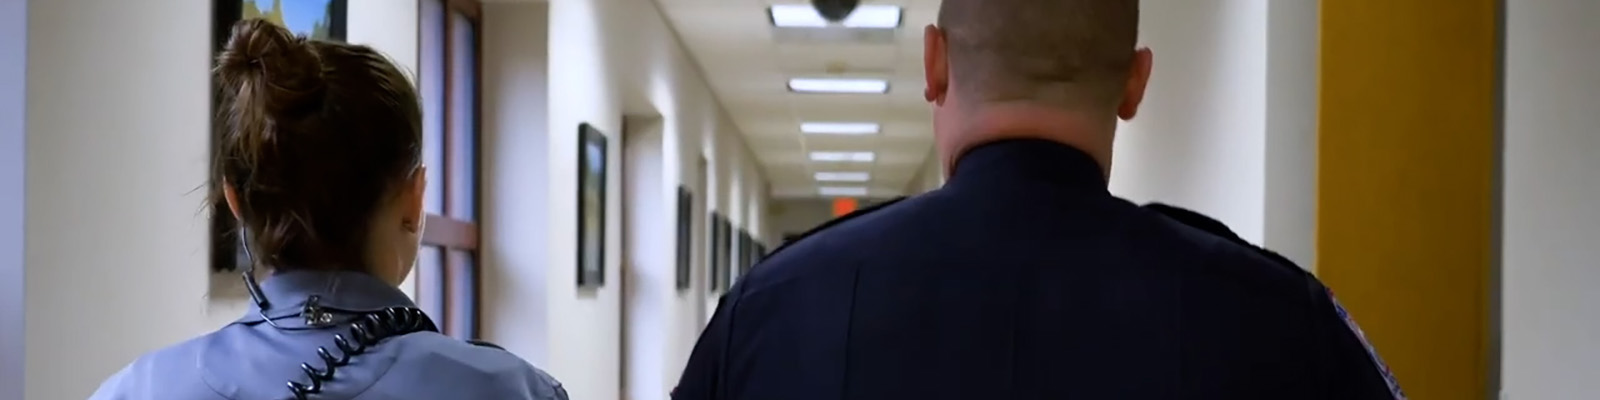 Woman and man wearing uniforms walking down hallway